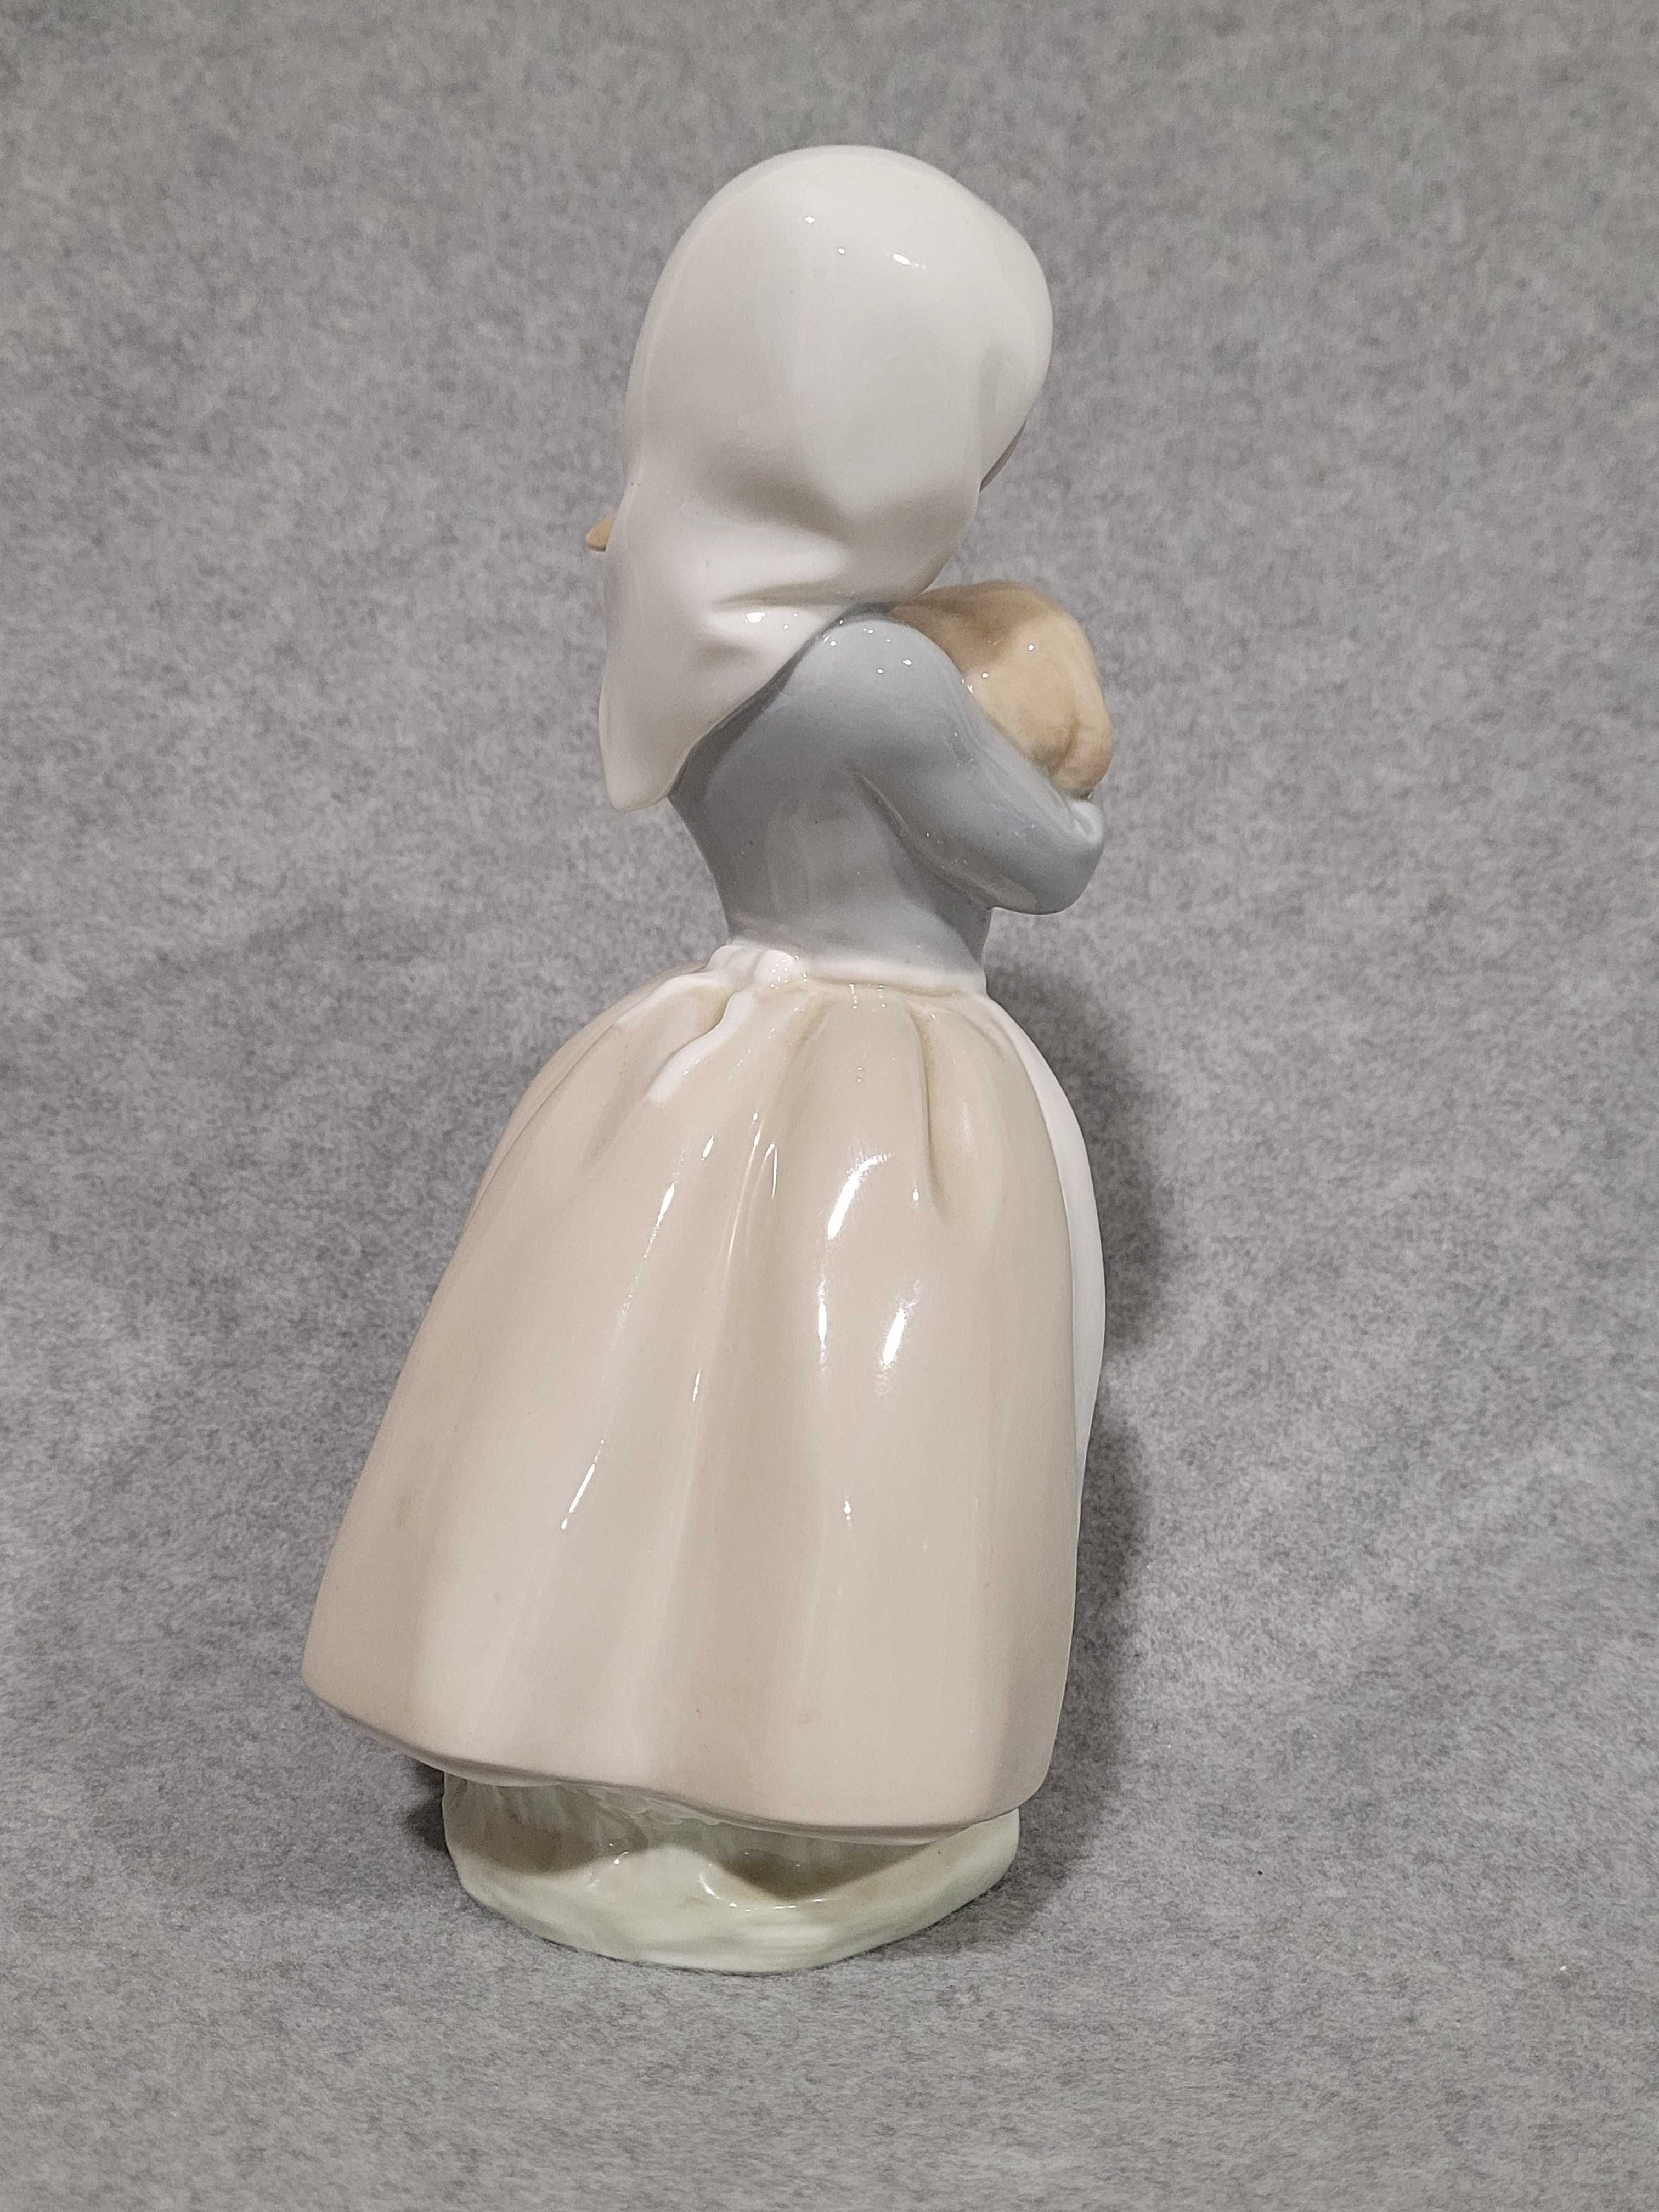 Статуэтка " Девочка с ягненком " Nao Lladro Испания .21 cм